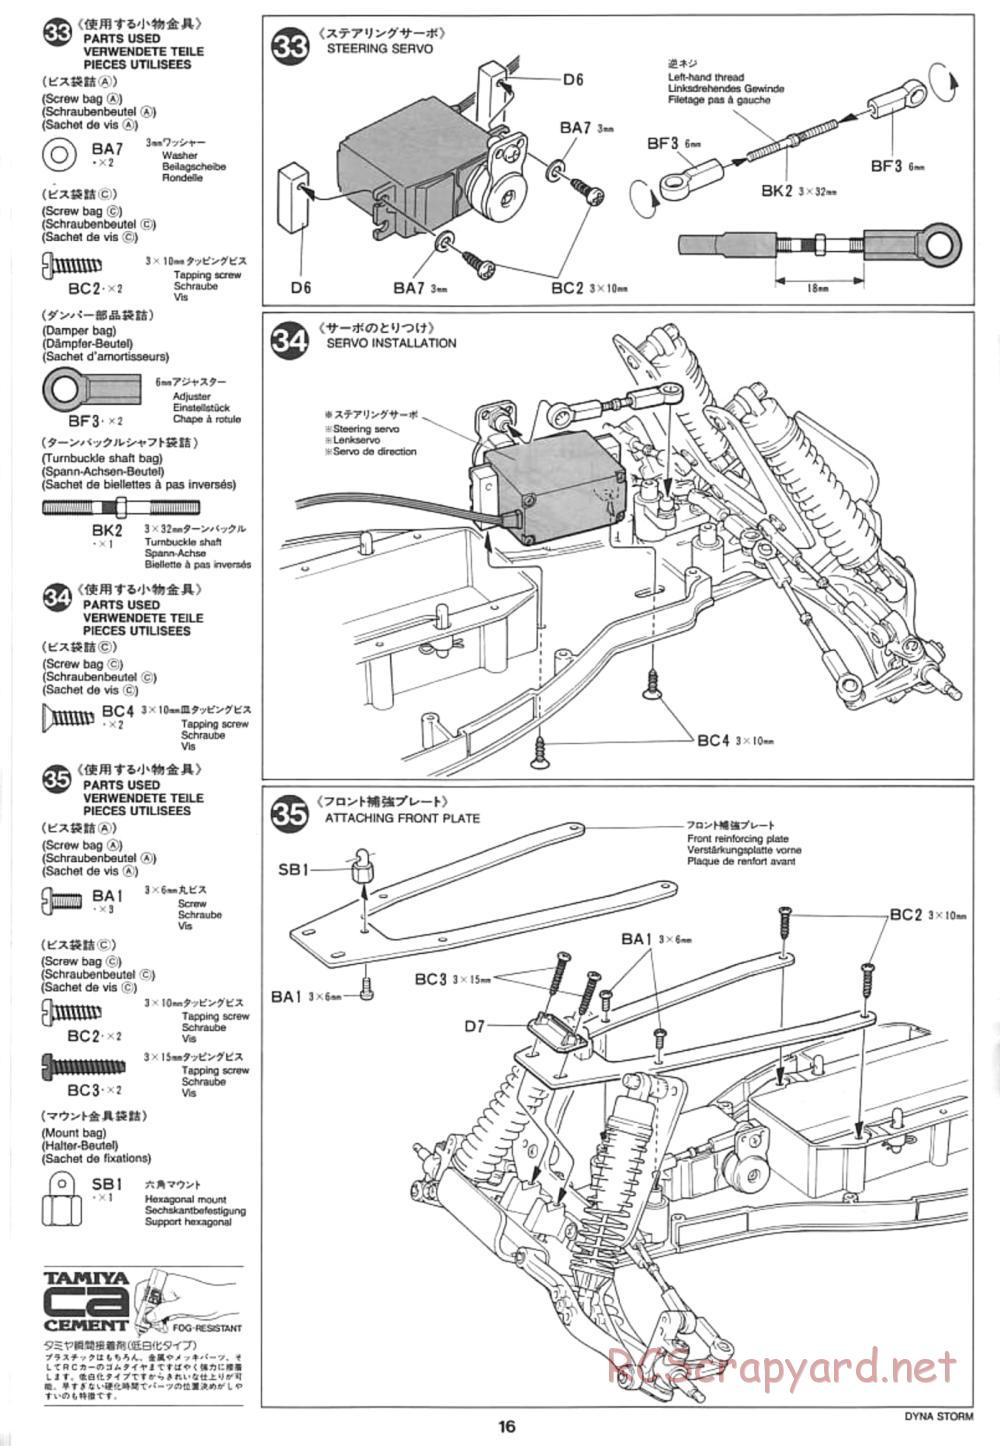 Tamiya - Dyna Storm Chassis - Manual - Page 16